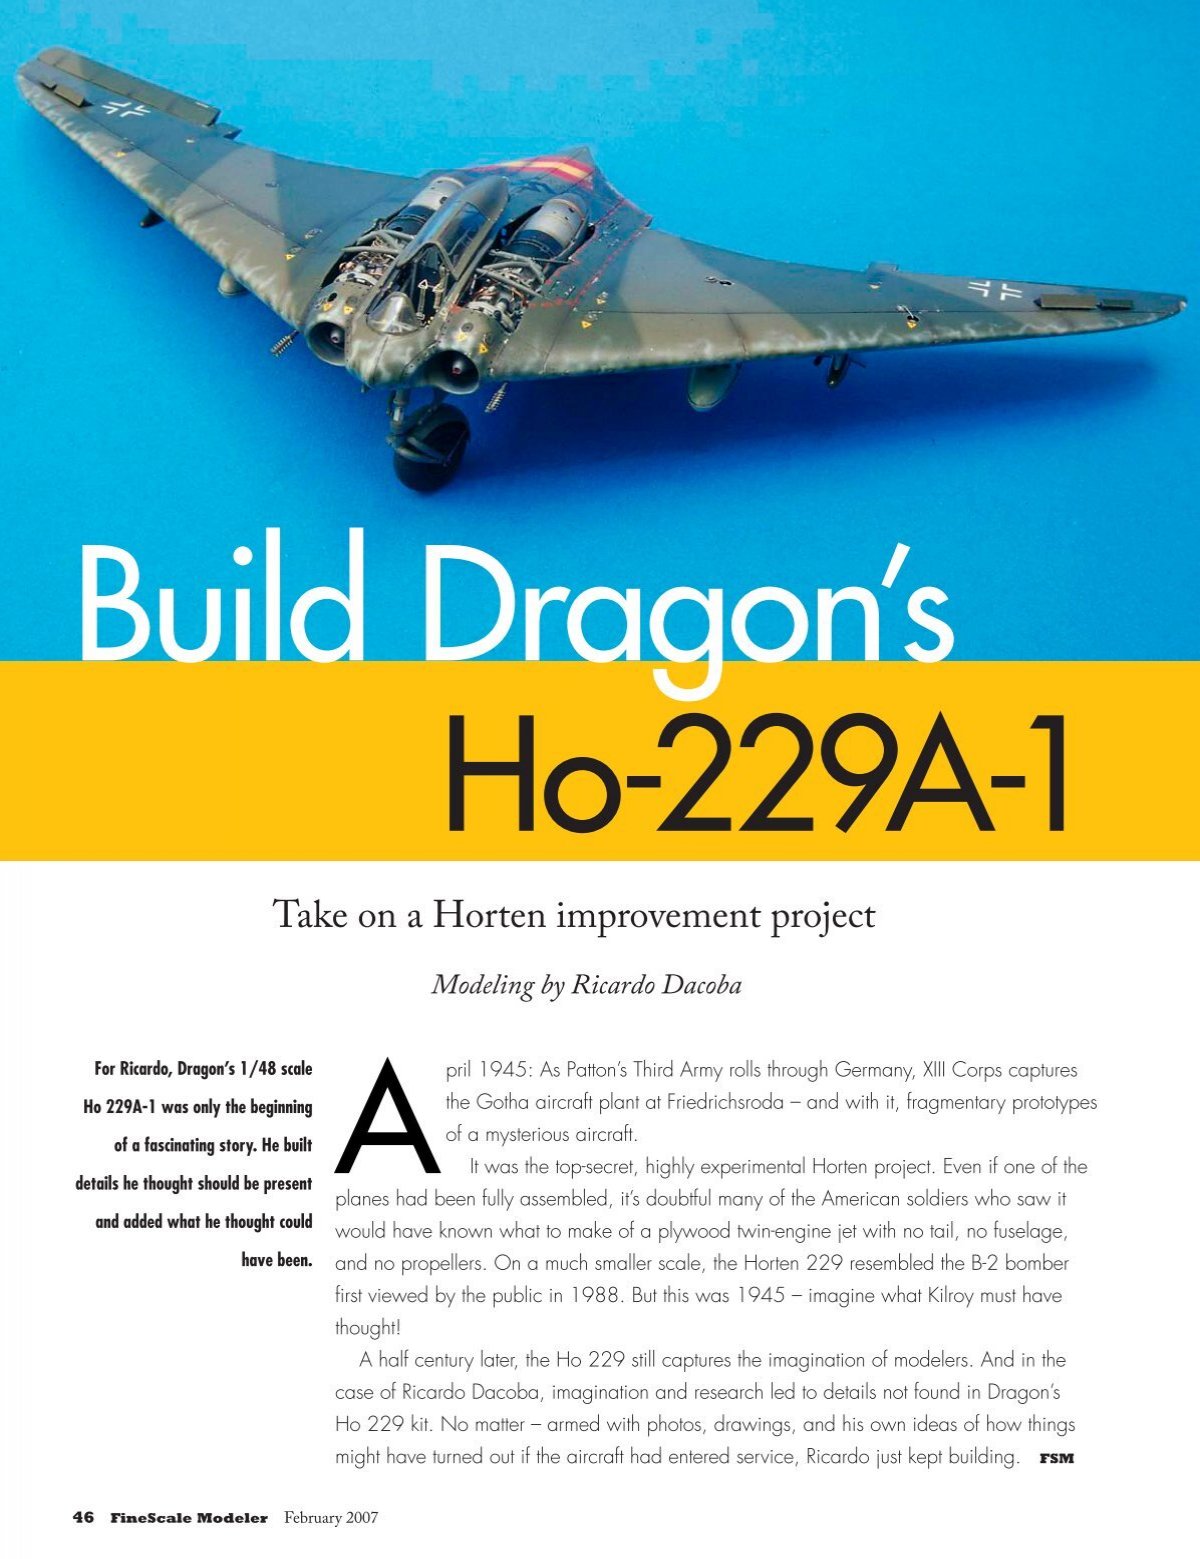 Take On A Horten Improvement Project Finescale Modeler